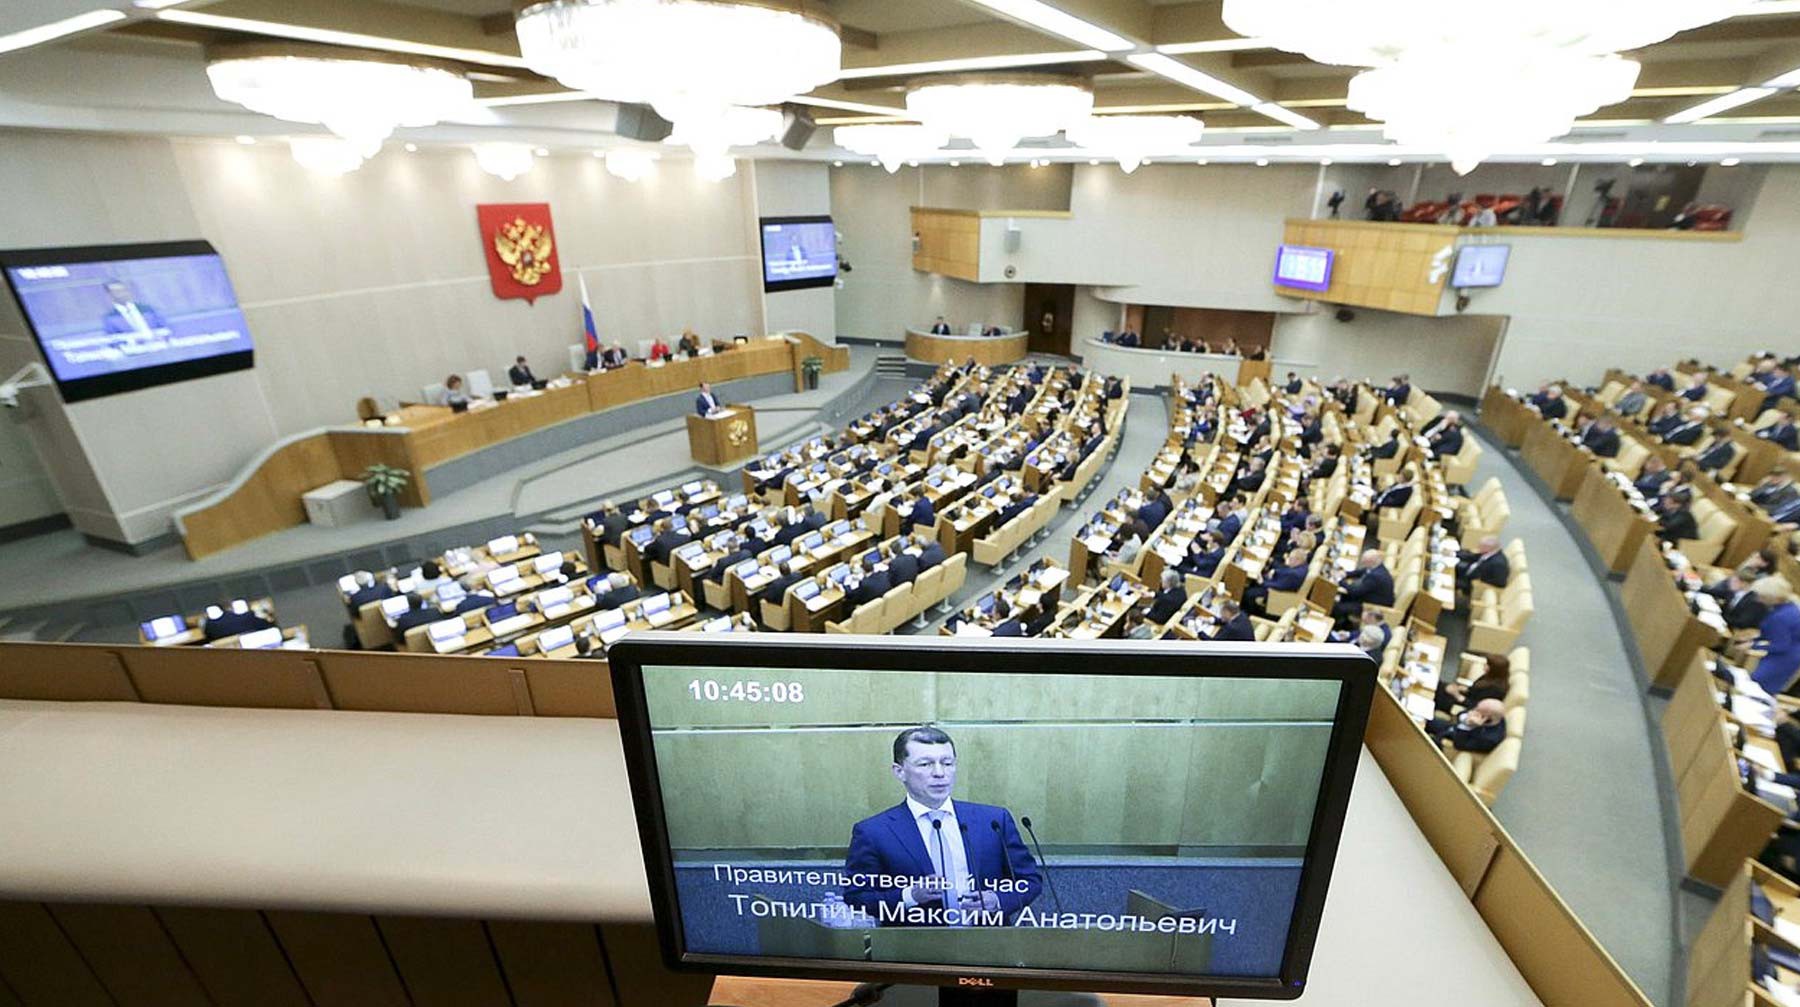 Dailystorm - Глава Минтруда рассказал в Госдуме о работе по снижению бедности в России